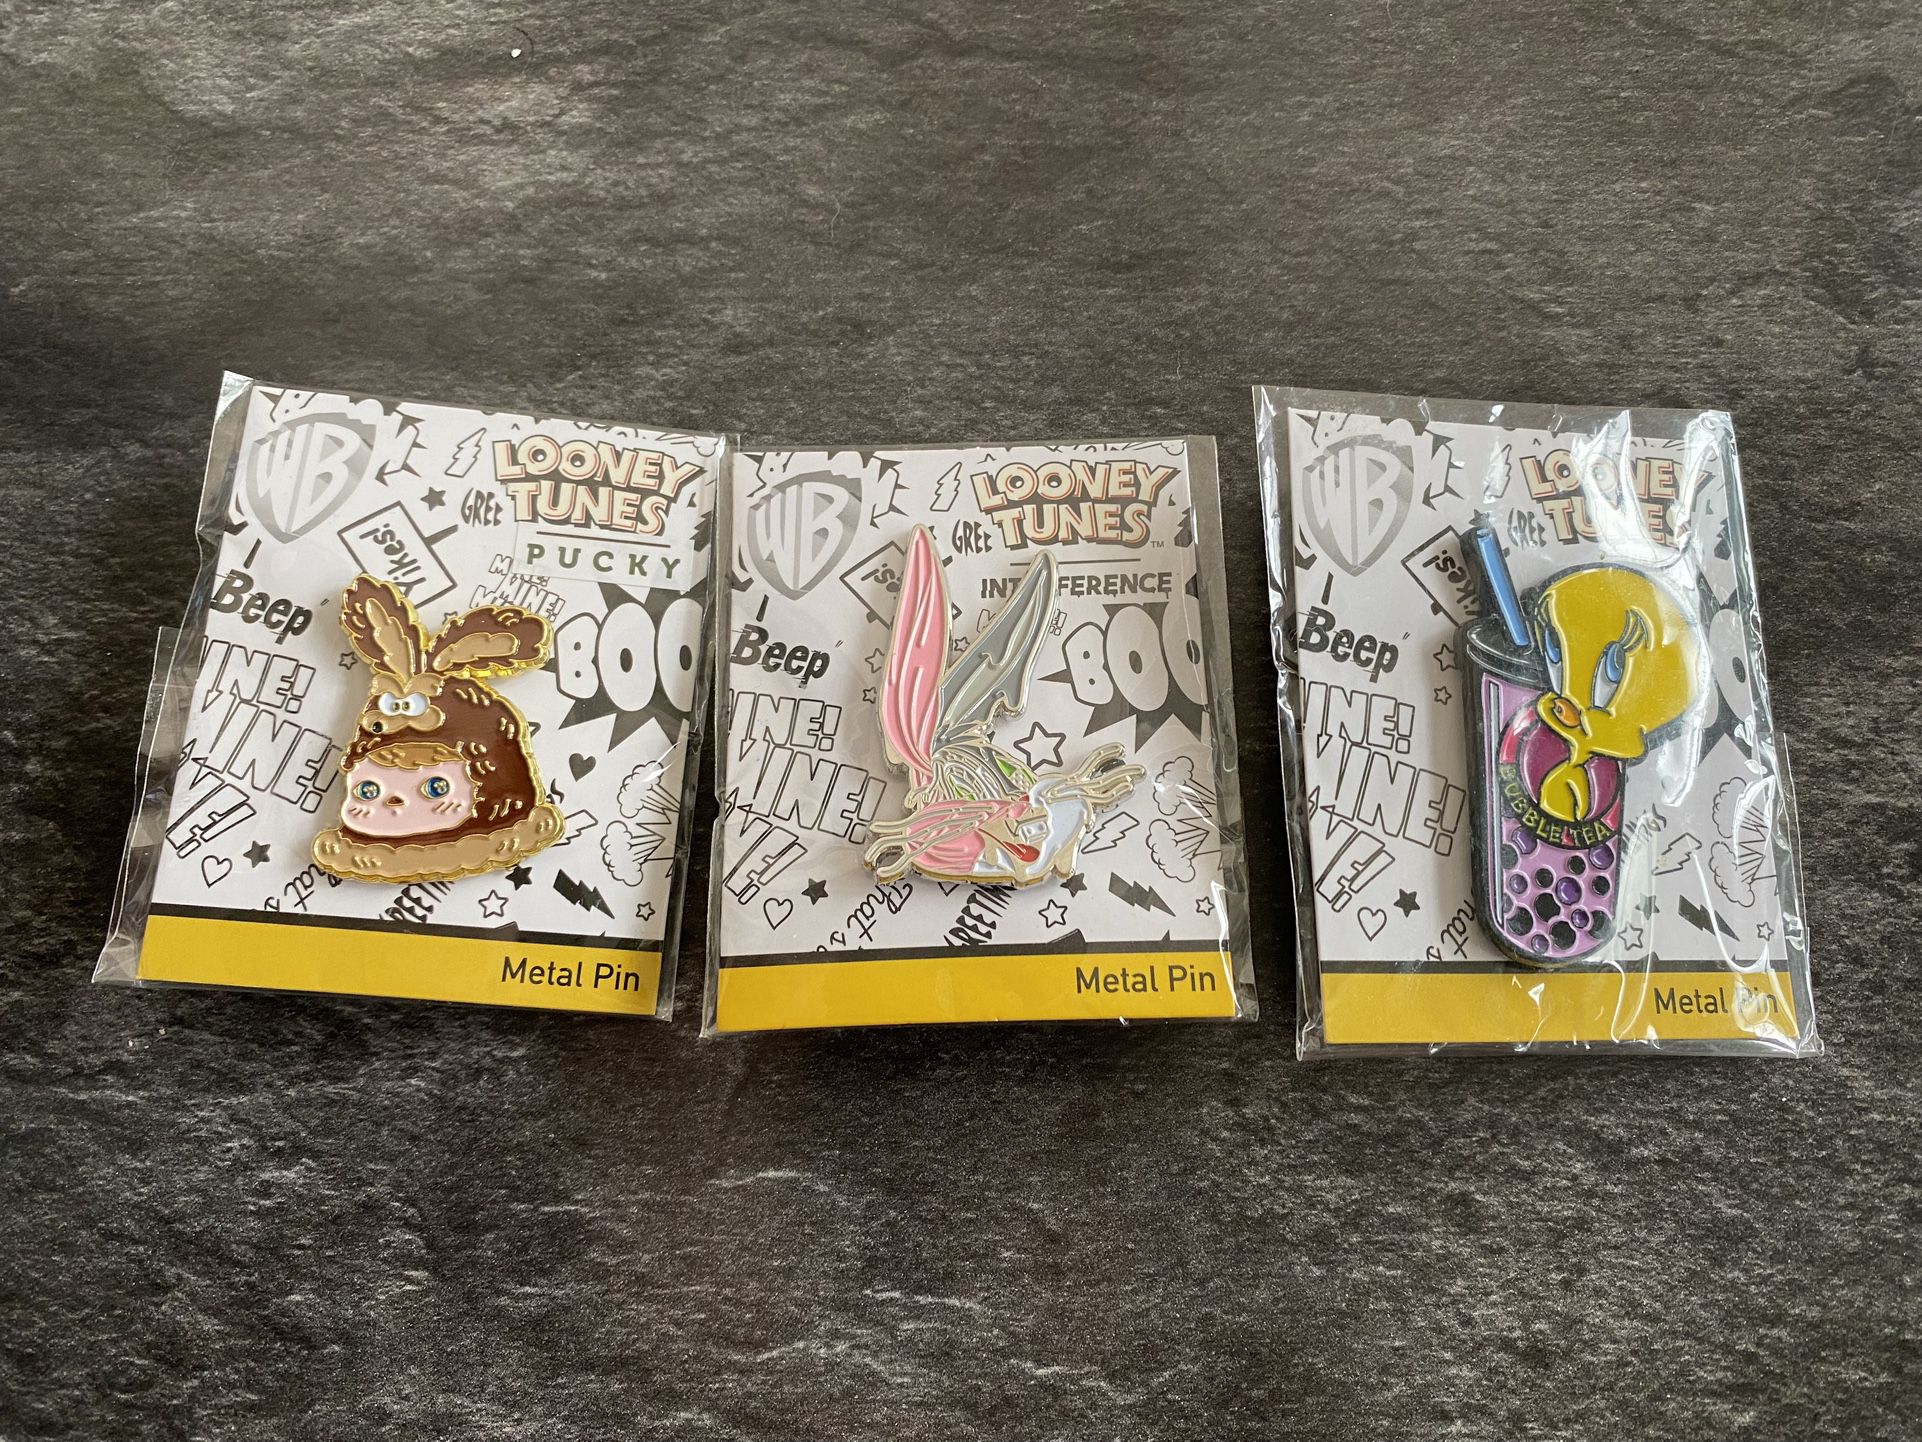 Set of 3 Loony Tunes Metal Pin Collectors Item Tweety Bird Bugs Bunny Pucky Rare Collectors Items